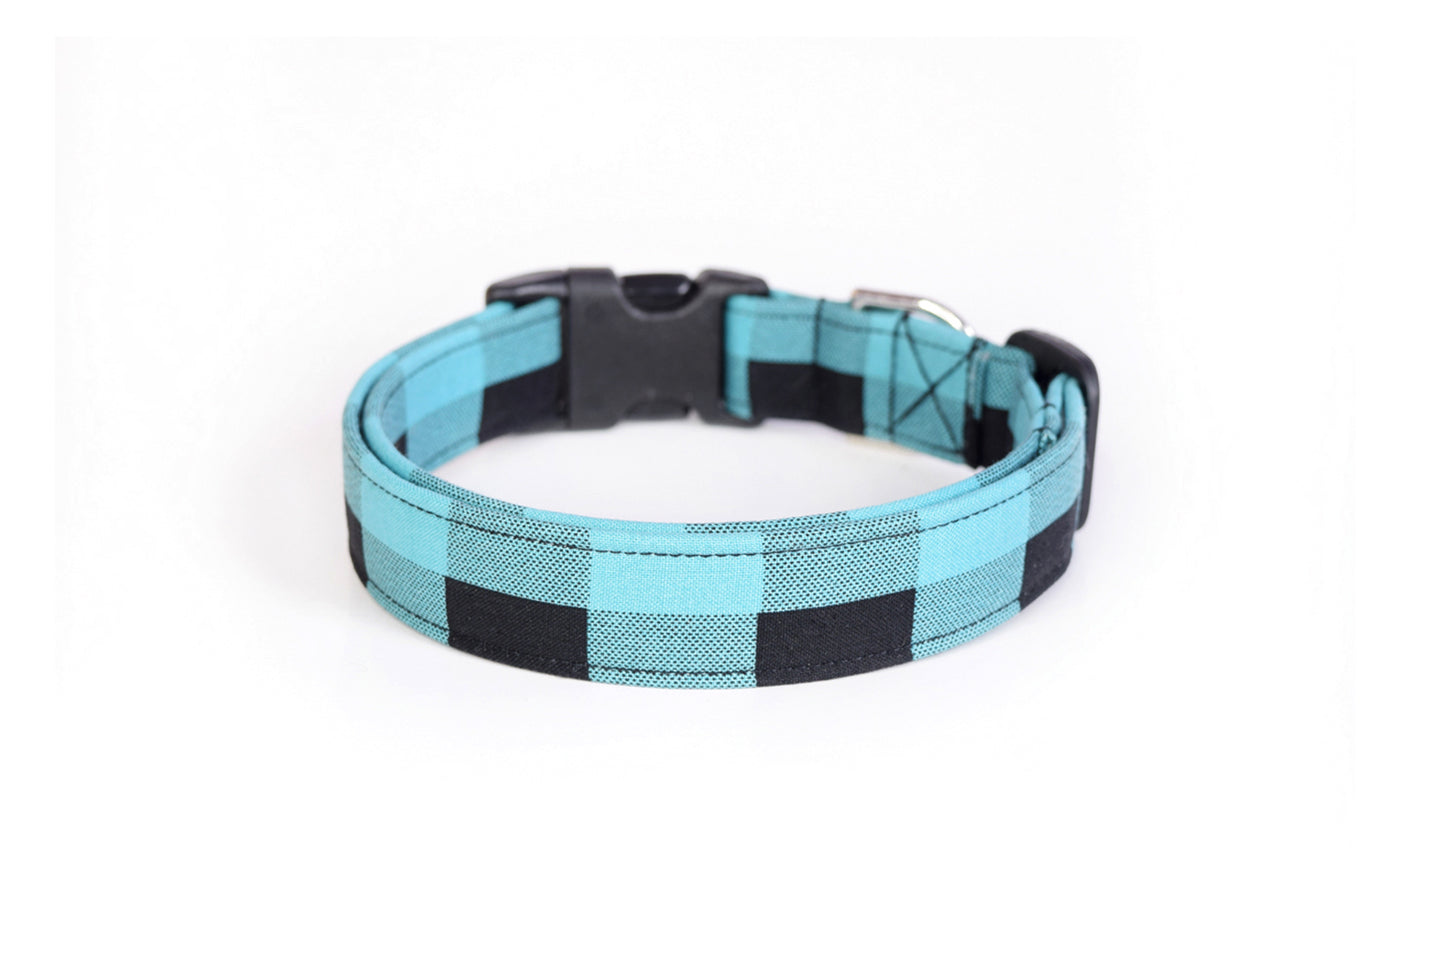 Teal Blue & Black Buffalo Plaid Dog Collar - Handmade by Kira's Pet Shop